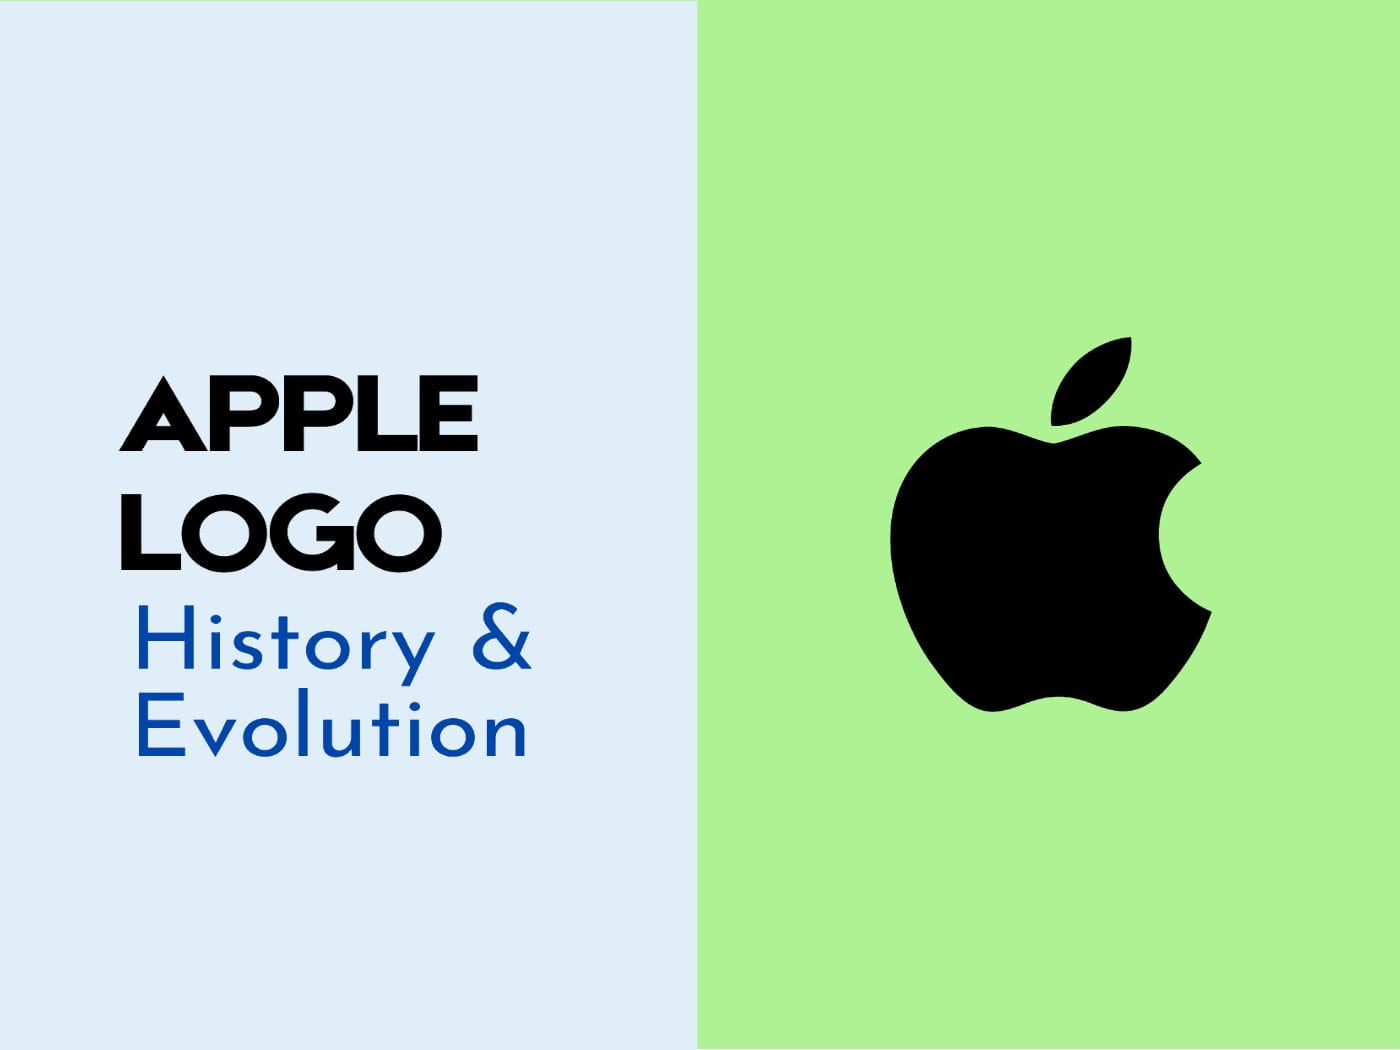 the-apple-logo-and-symbols-history-evolution-elements